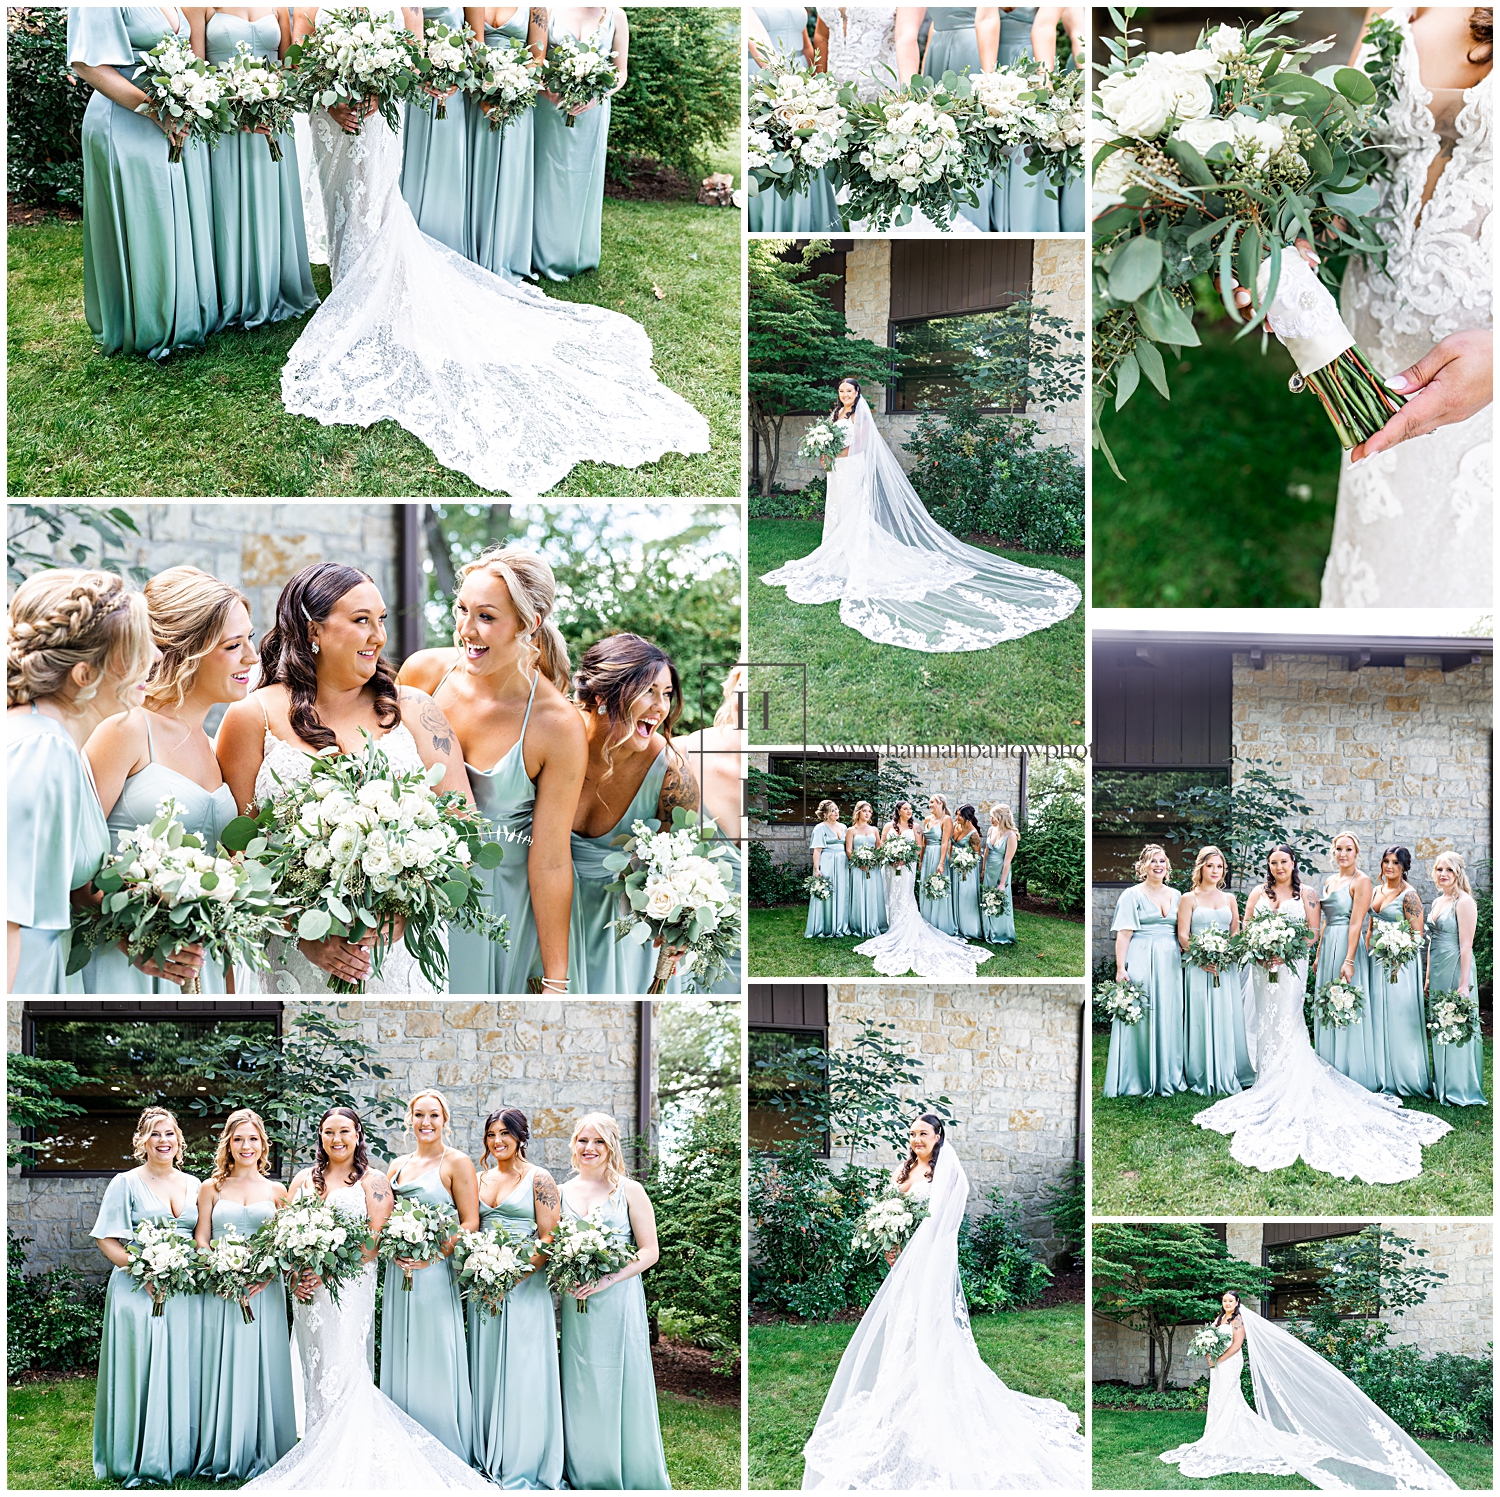 Bridesmaids in Sage Green Silk Dresses Posing with Bride